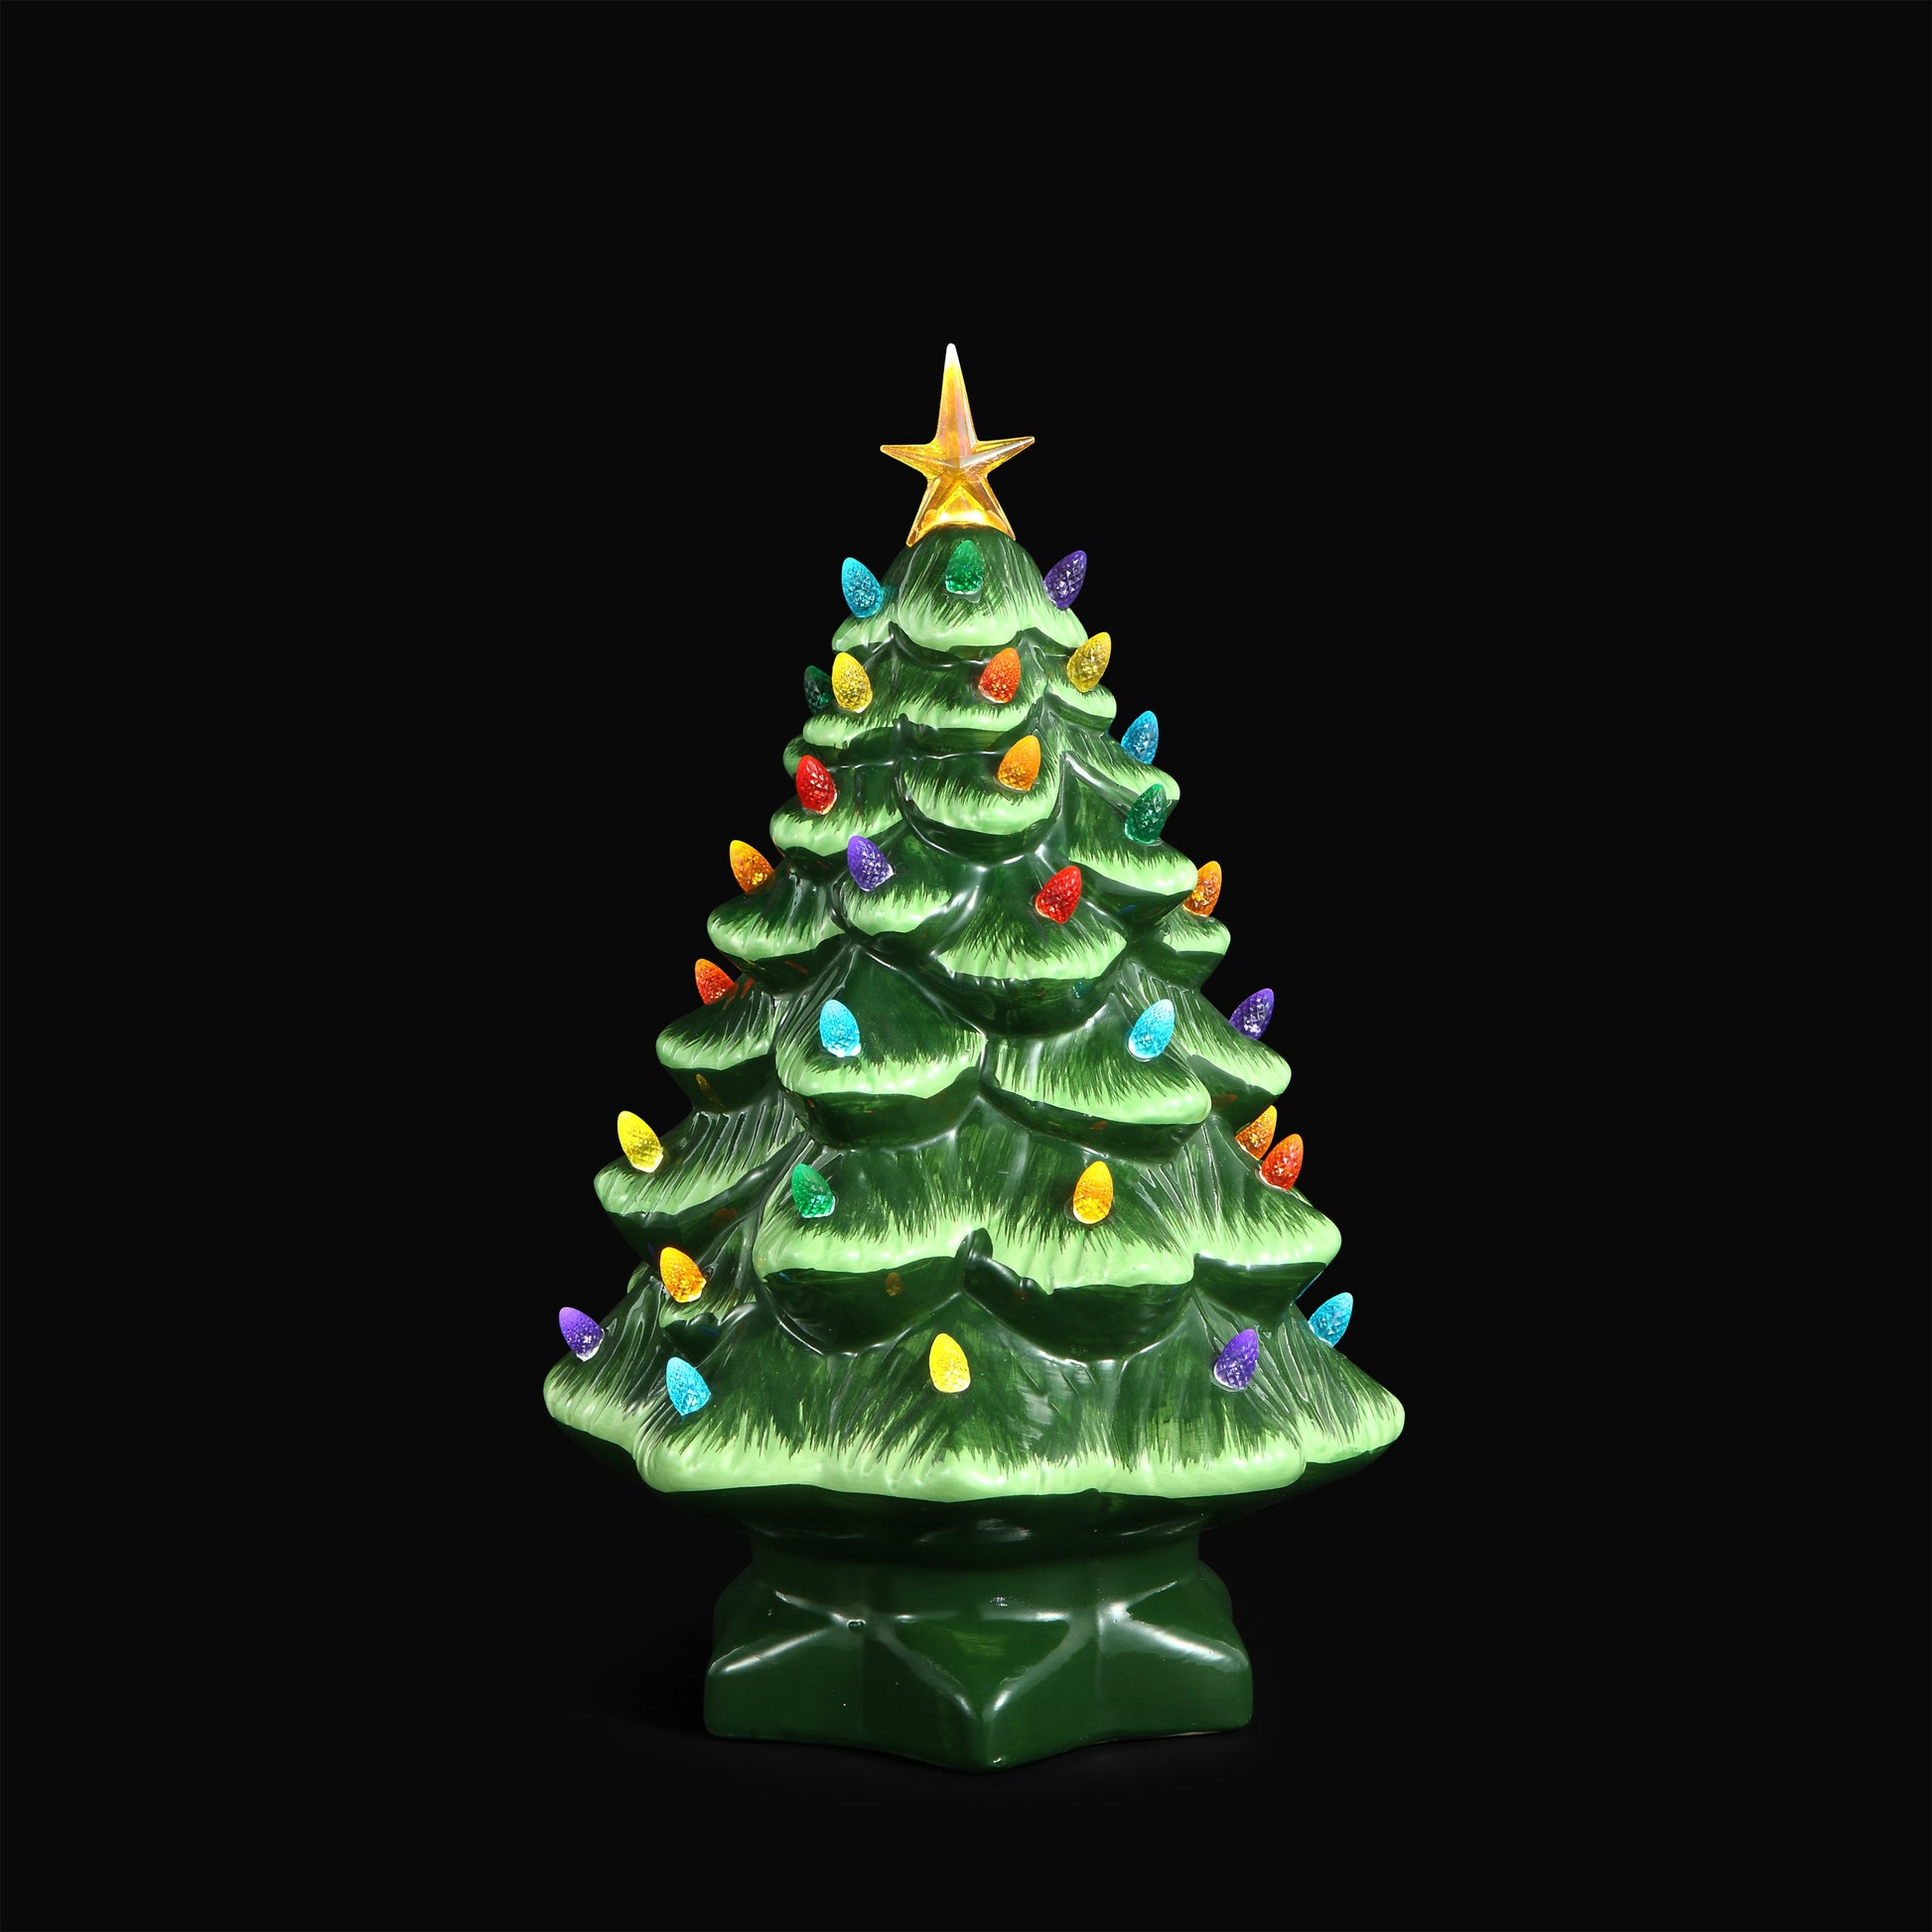 Mr. Christmas 14 Nostalgic Ceramic Christmas Tree with Topper